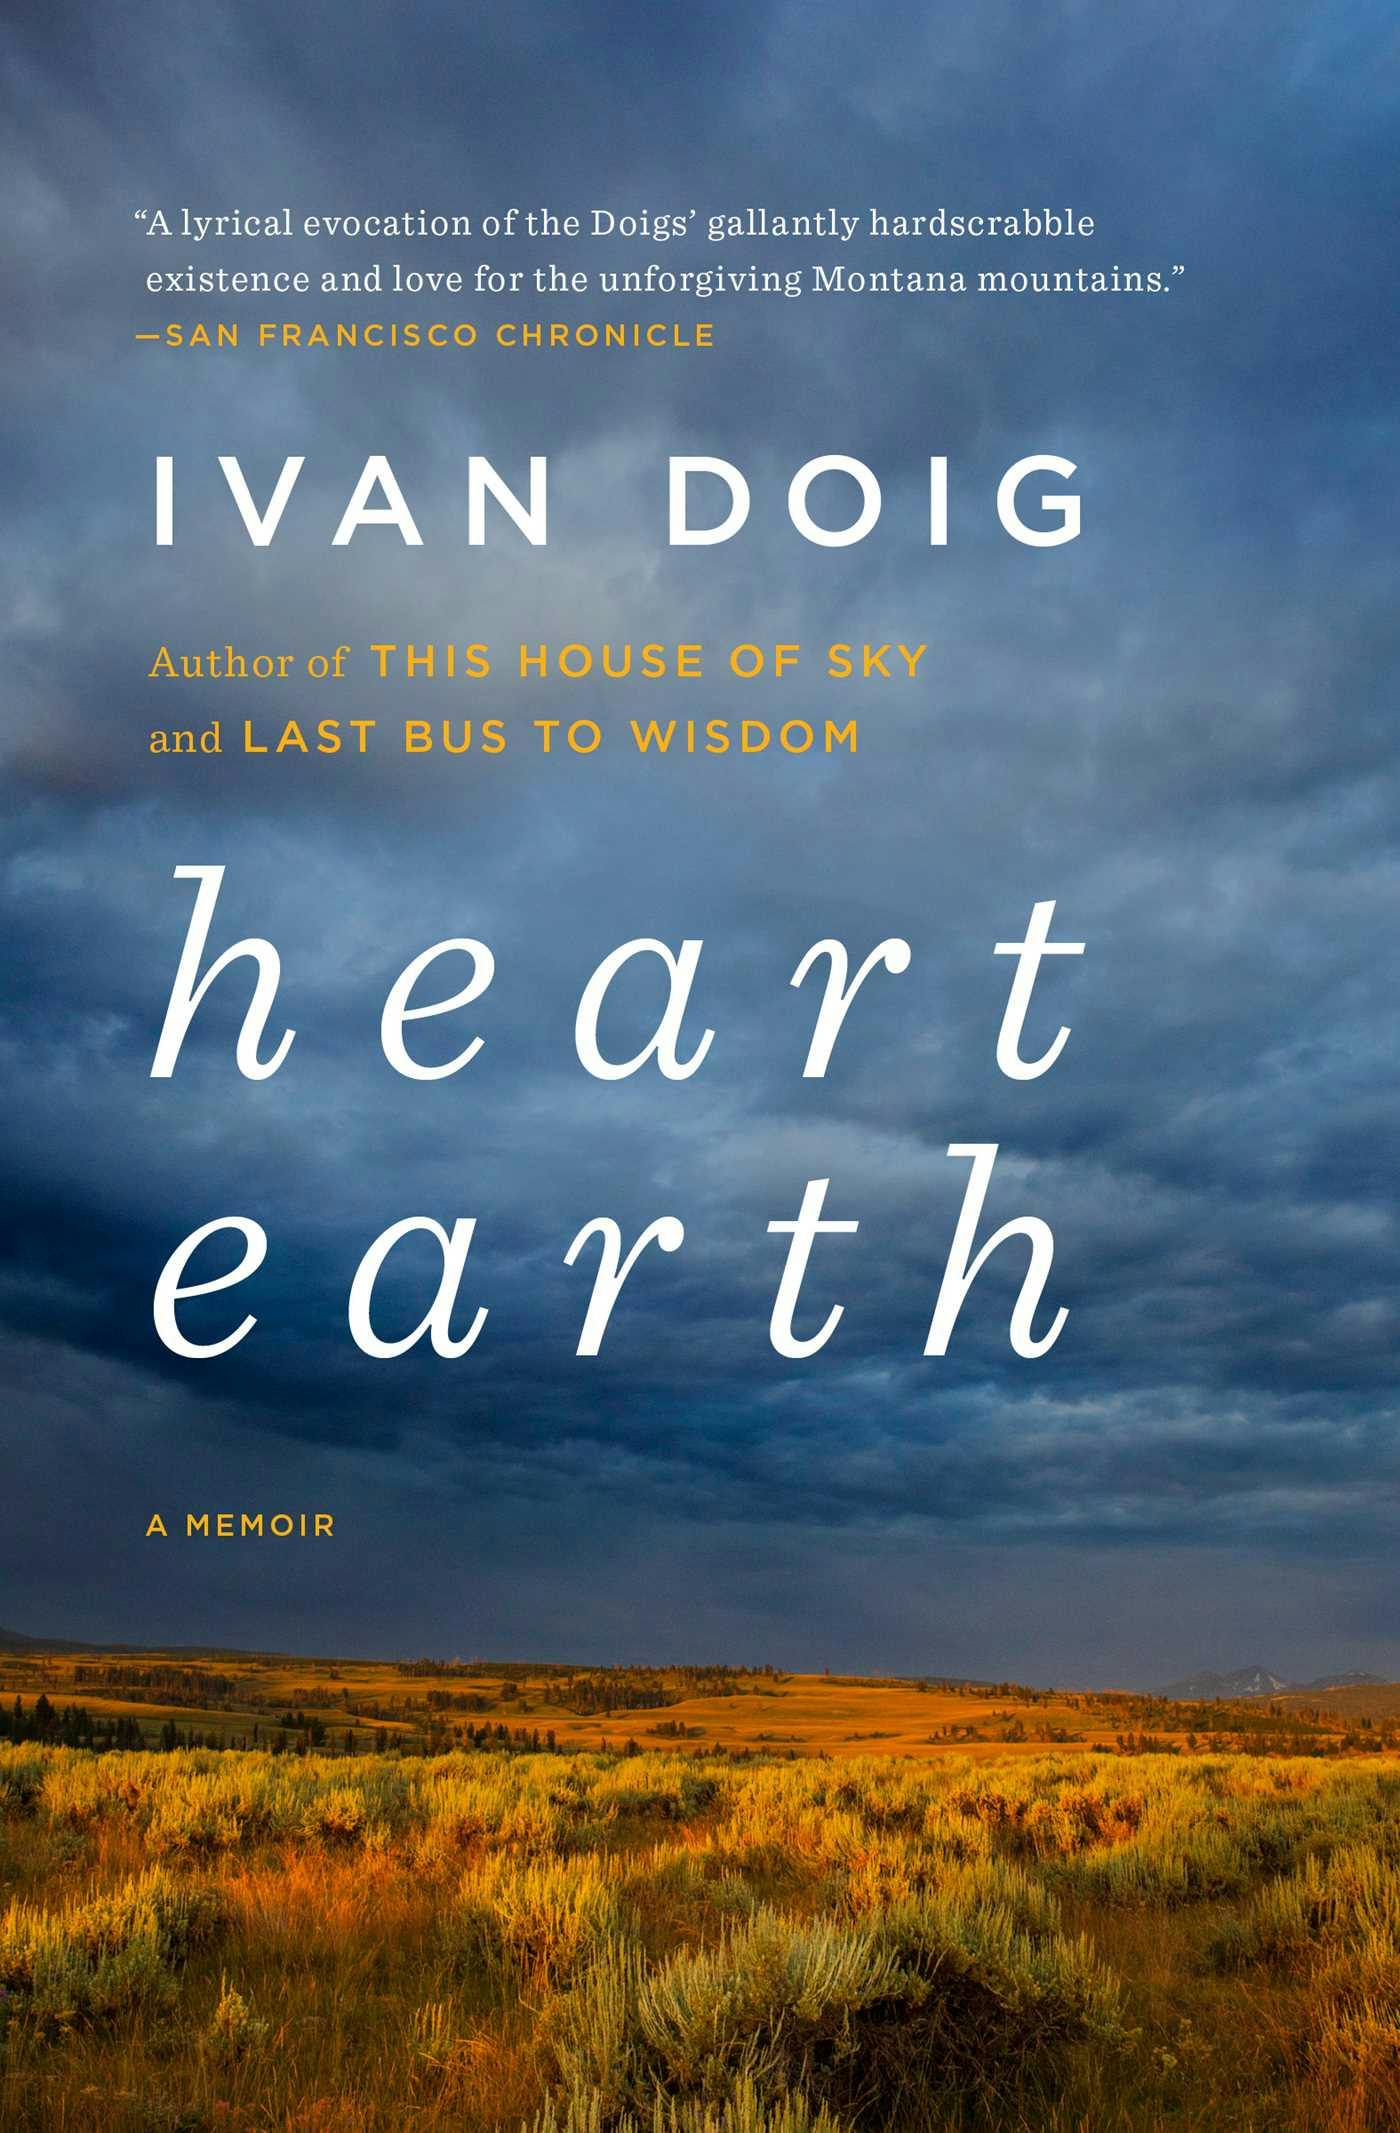 Heart Earth - Ivan Doig